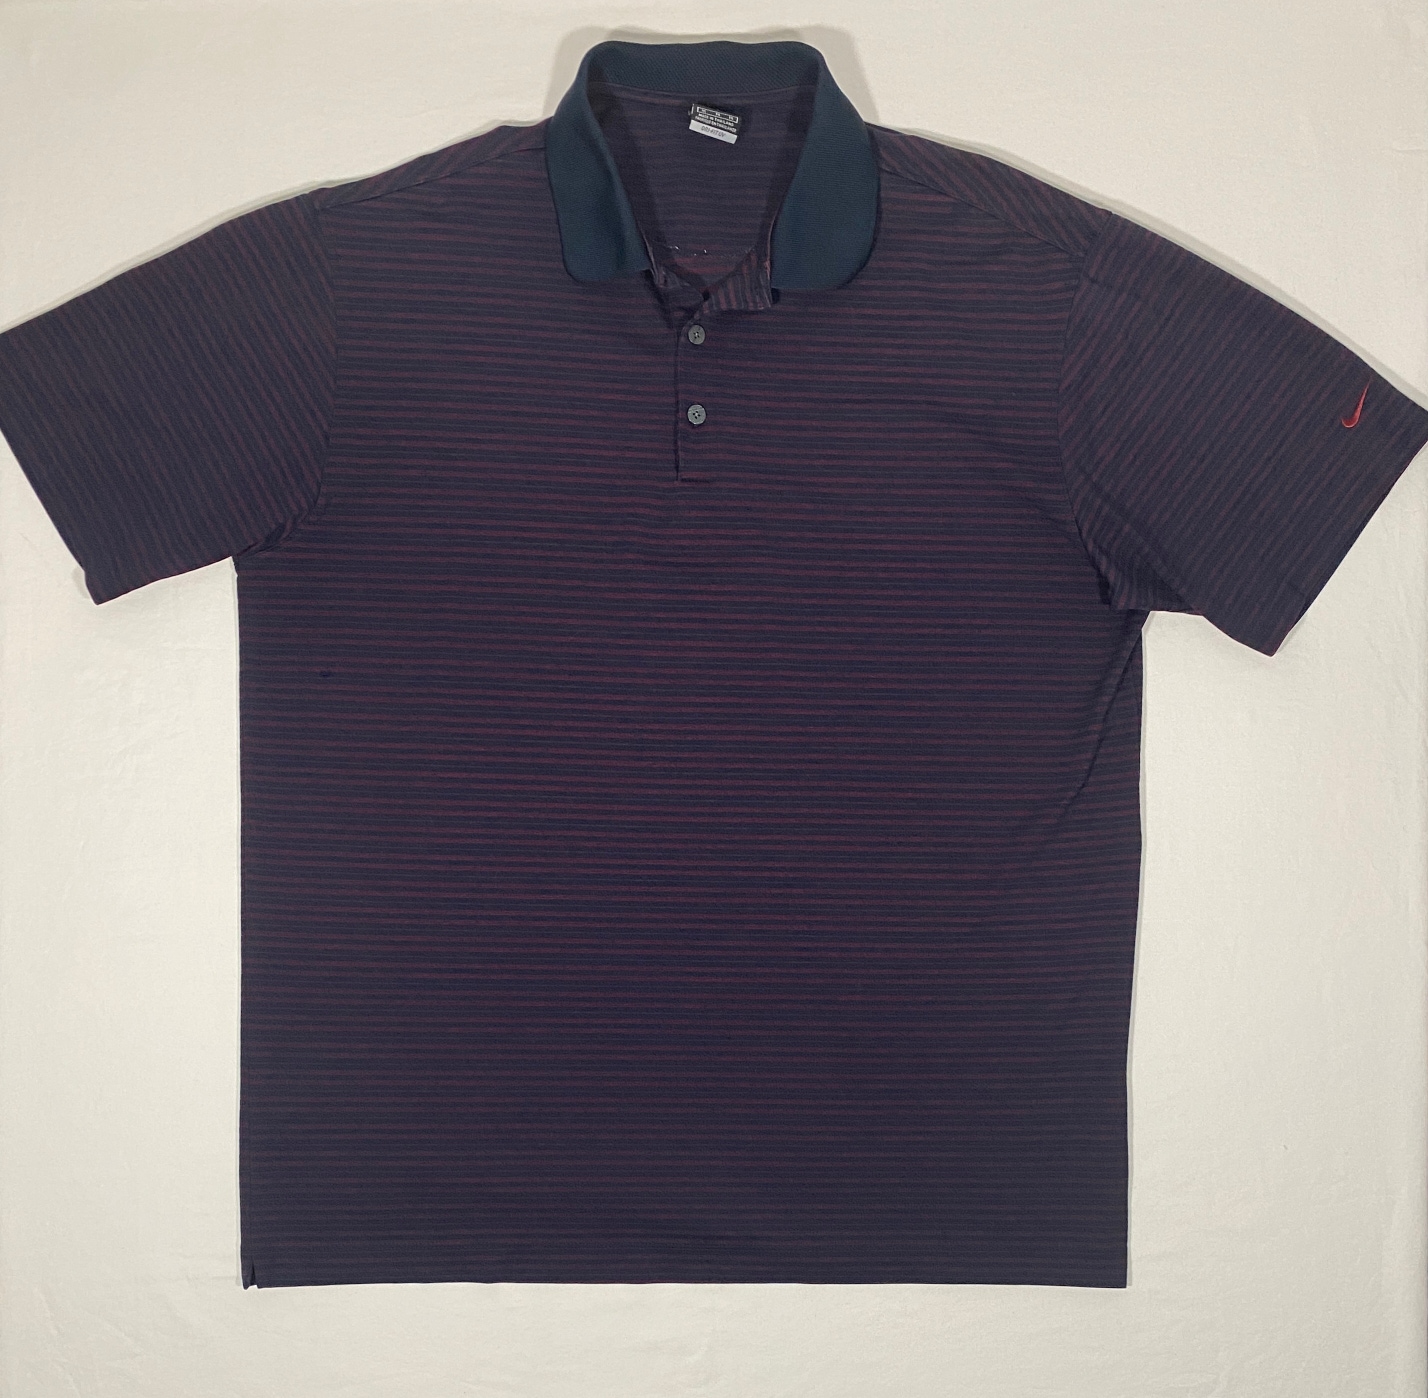 NIKE Golf Dri-FIT UV Size XL Navy/Burgundy Short Sleeve Performance Polo Shirt